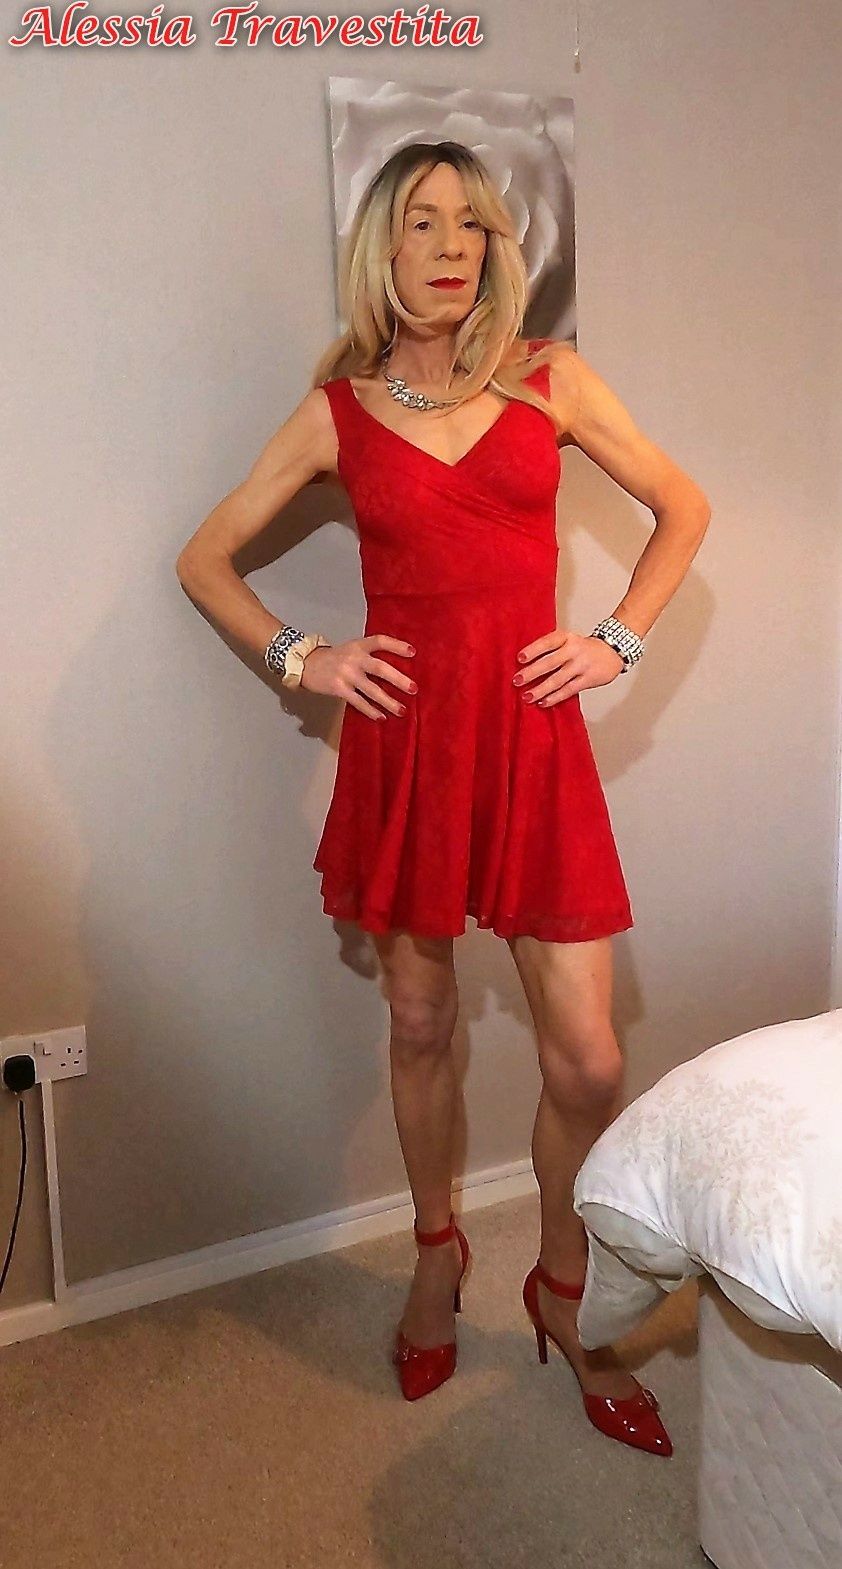 65 Alessia Travestita in Flirty Red Dress #50